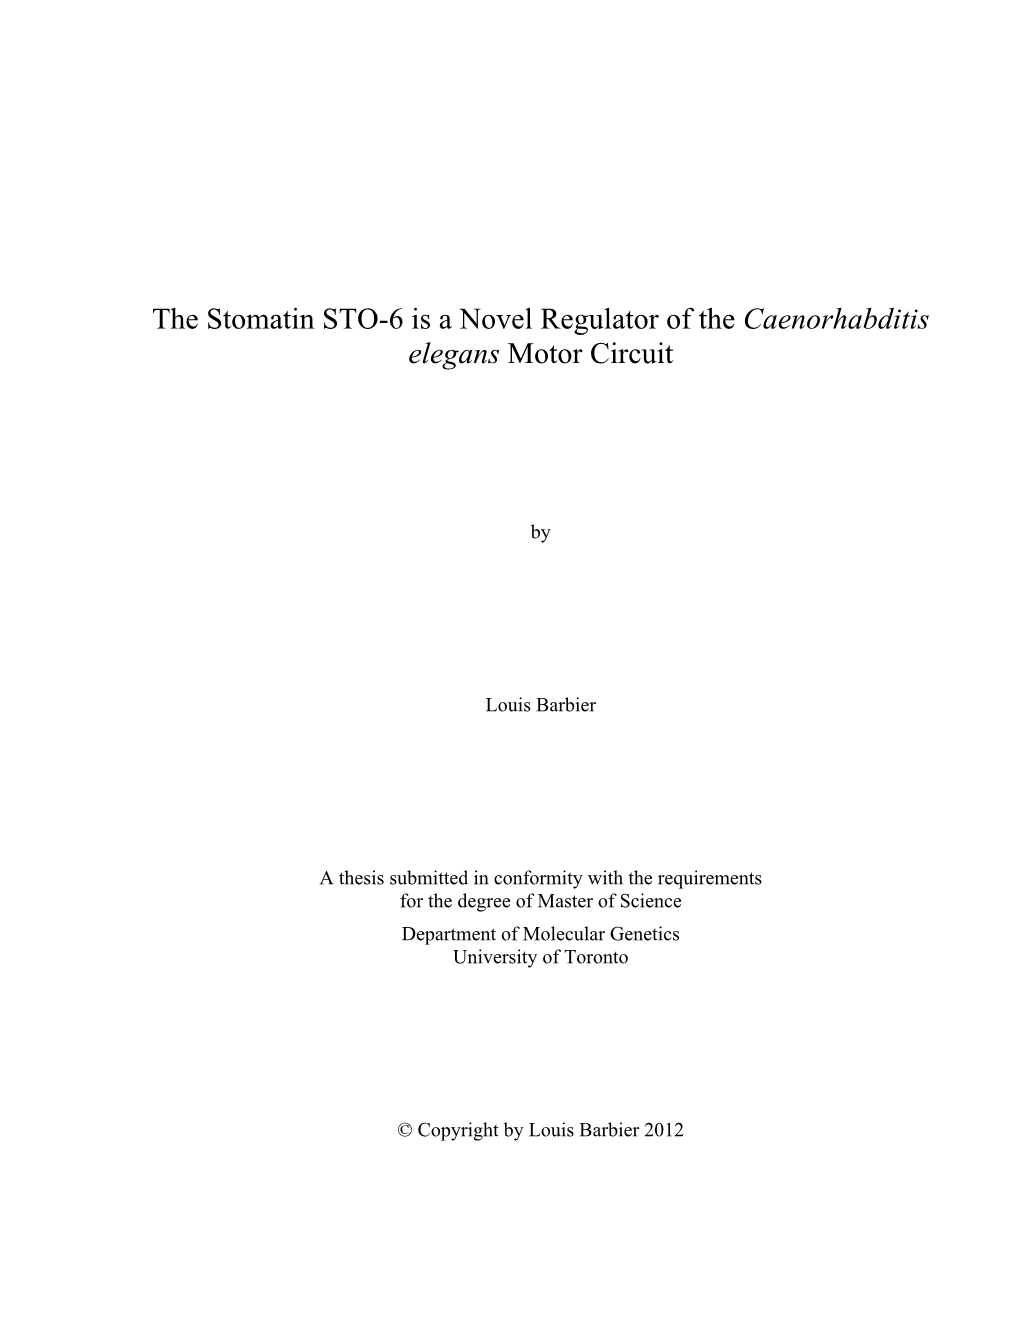 The Stomatin STO-6 Is a Novel Regulator of the Caenorhabditis Elegans Motor Circuit